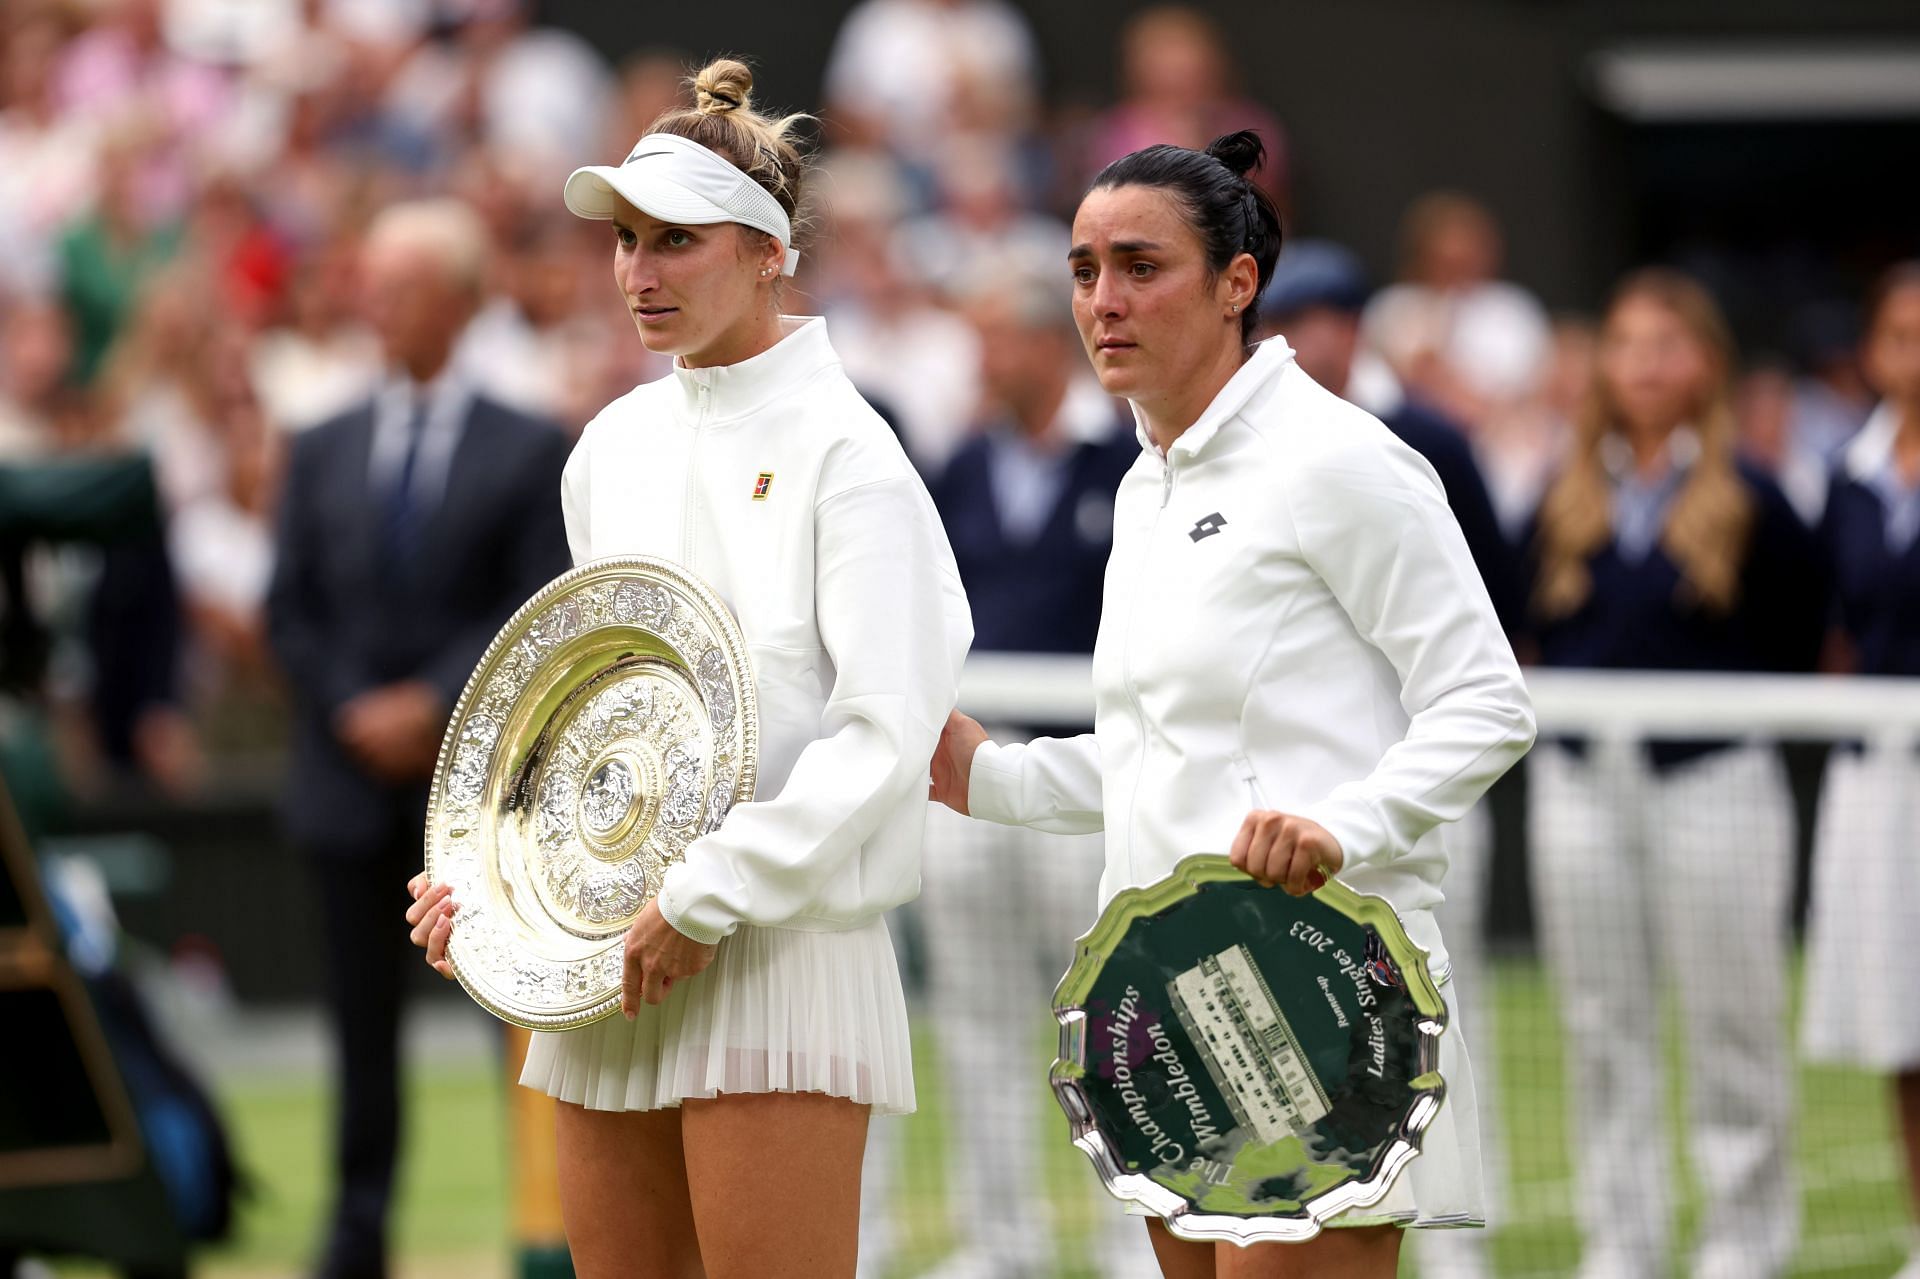 Marketa Vondrousova defeated Ons Jabeur in the Wimbledon 2023 final